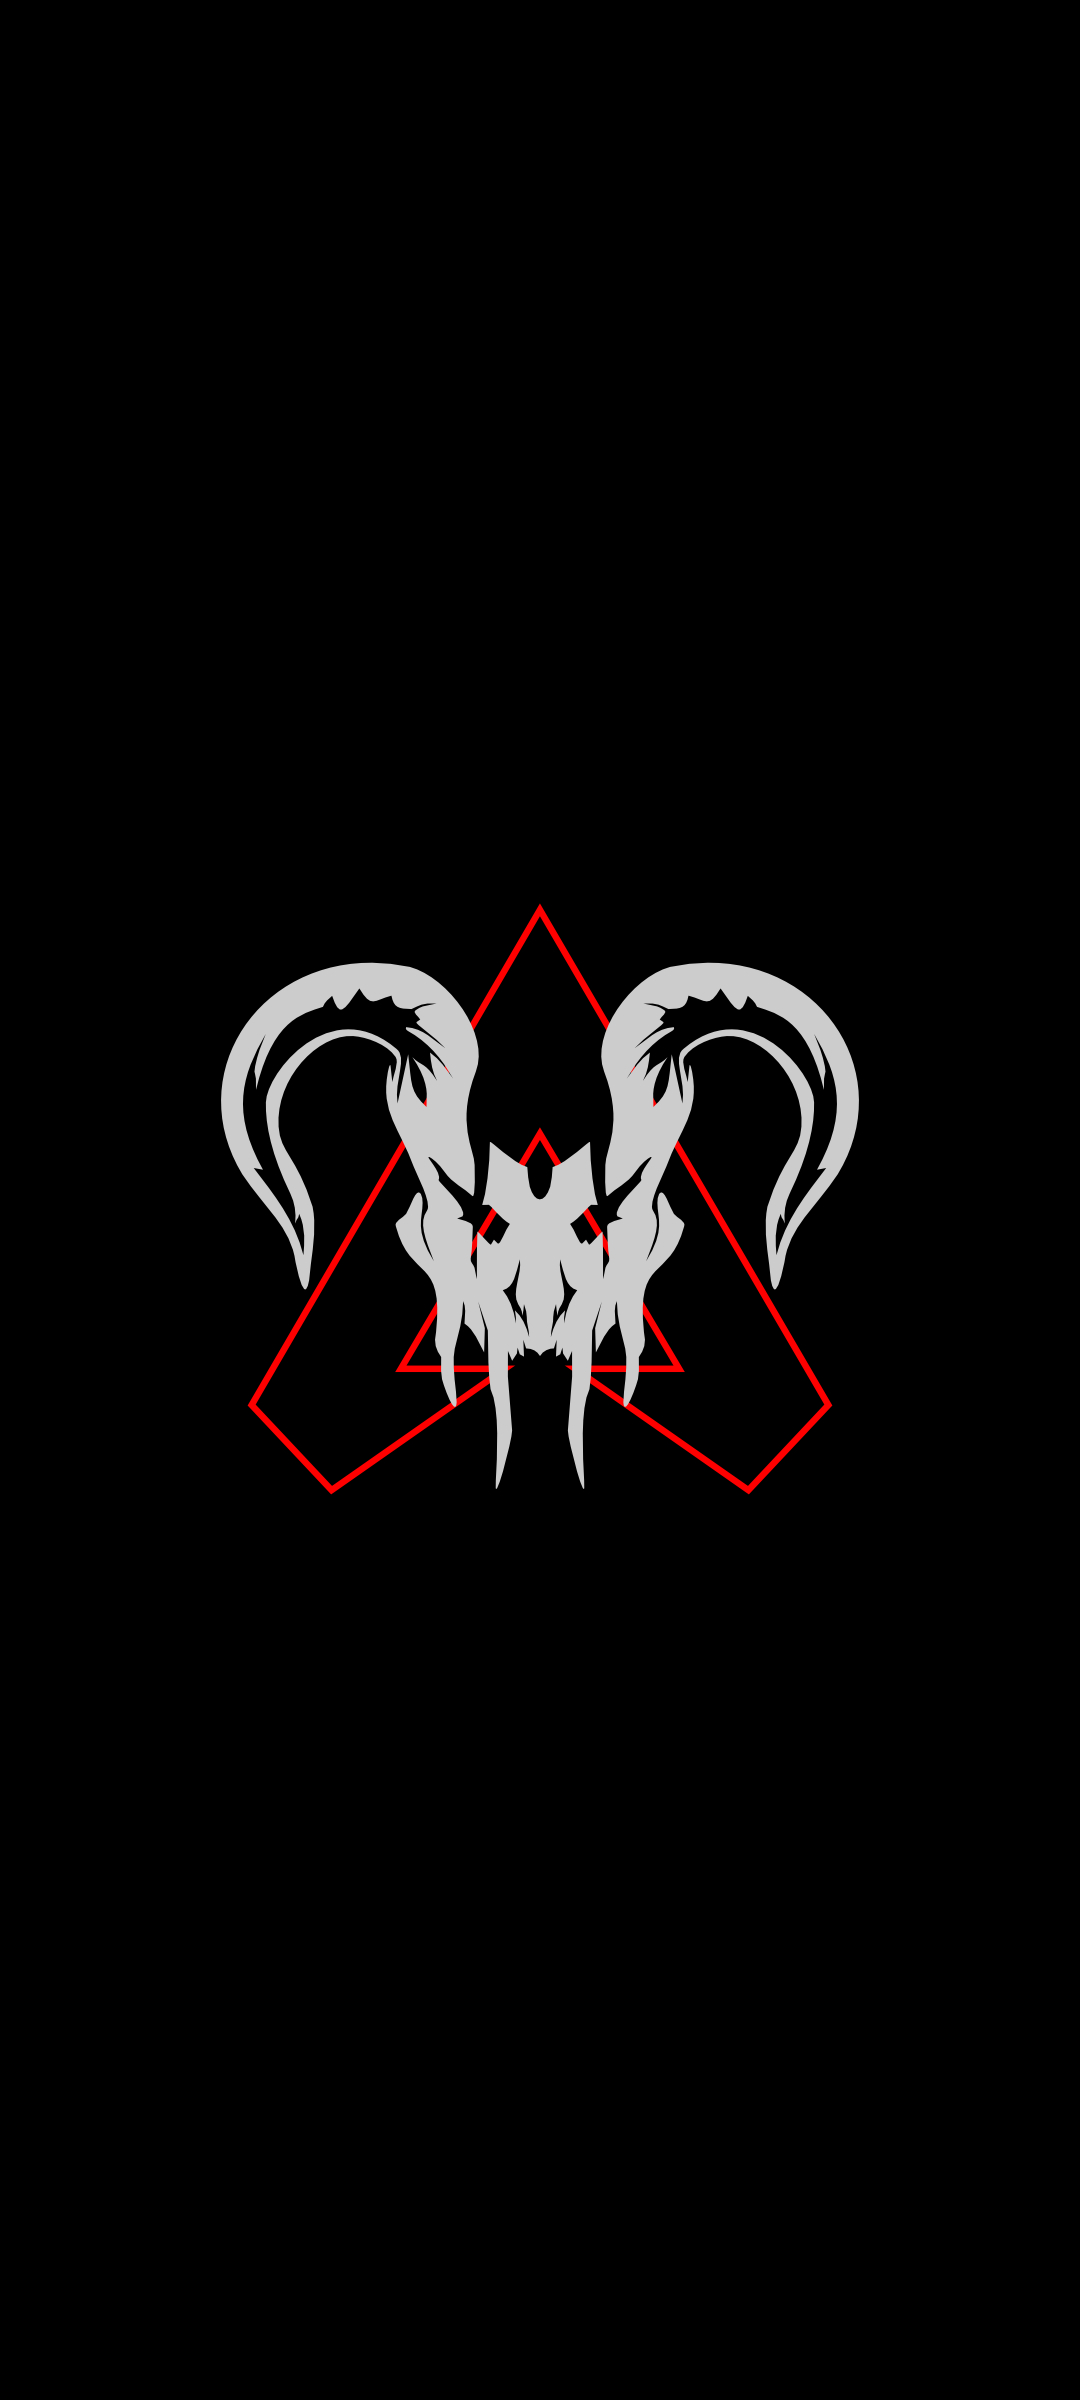 Apex Legends かっこいいプレデターのロゴ Predator Logo Oppo Reno3 A 壁紙 待ち受け スマラン